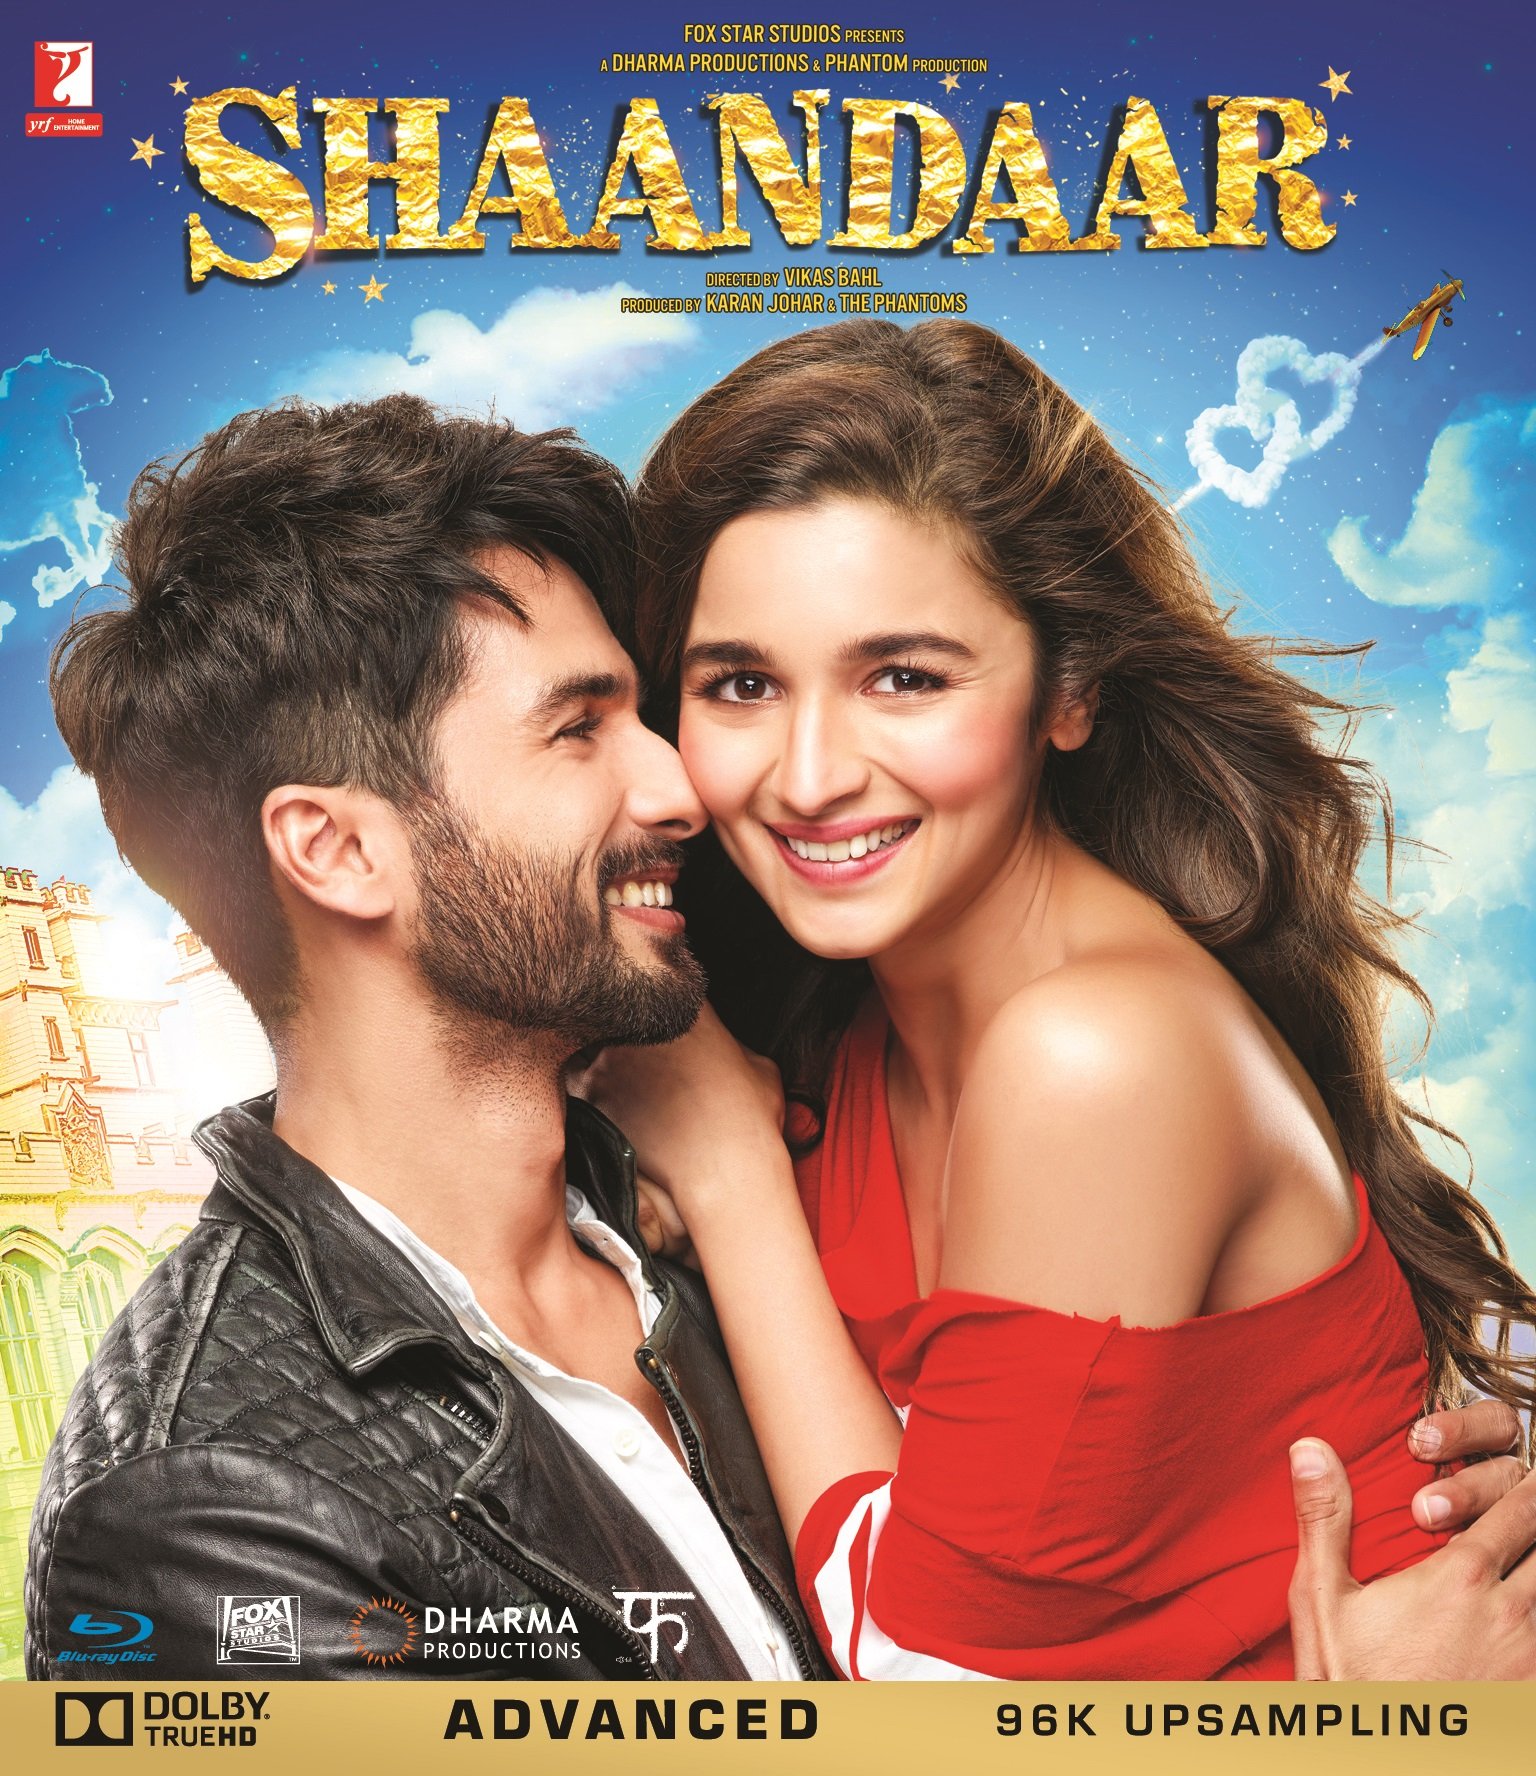 shaandaar-movie-purchase-or-watch-online